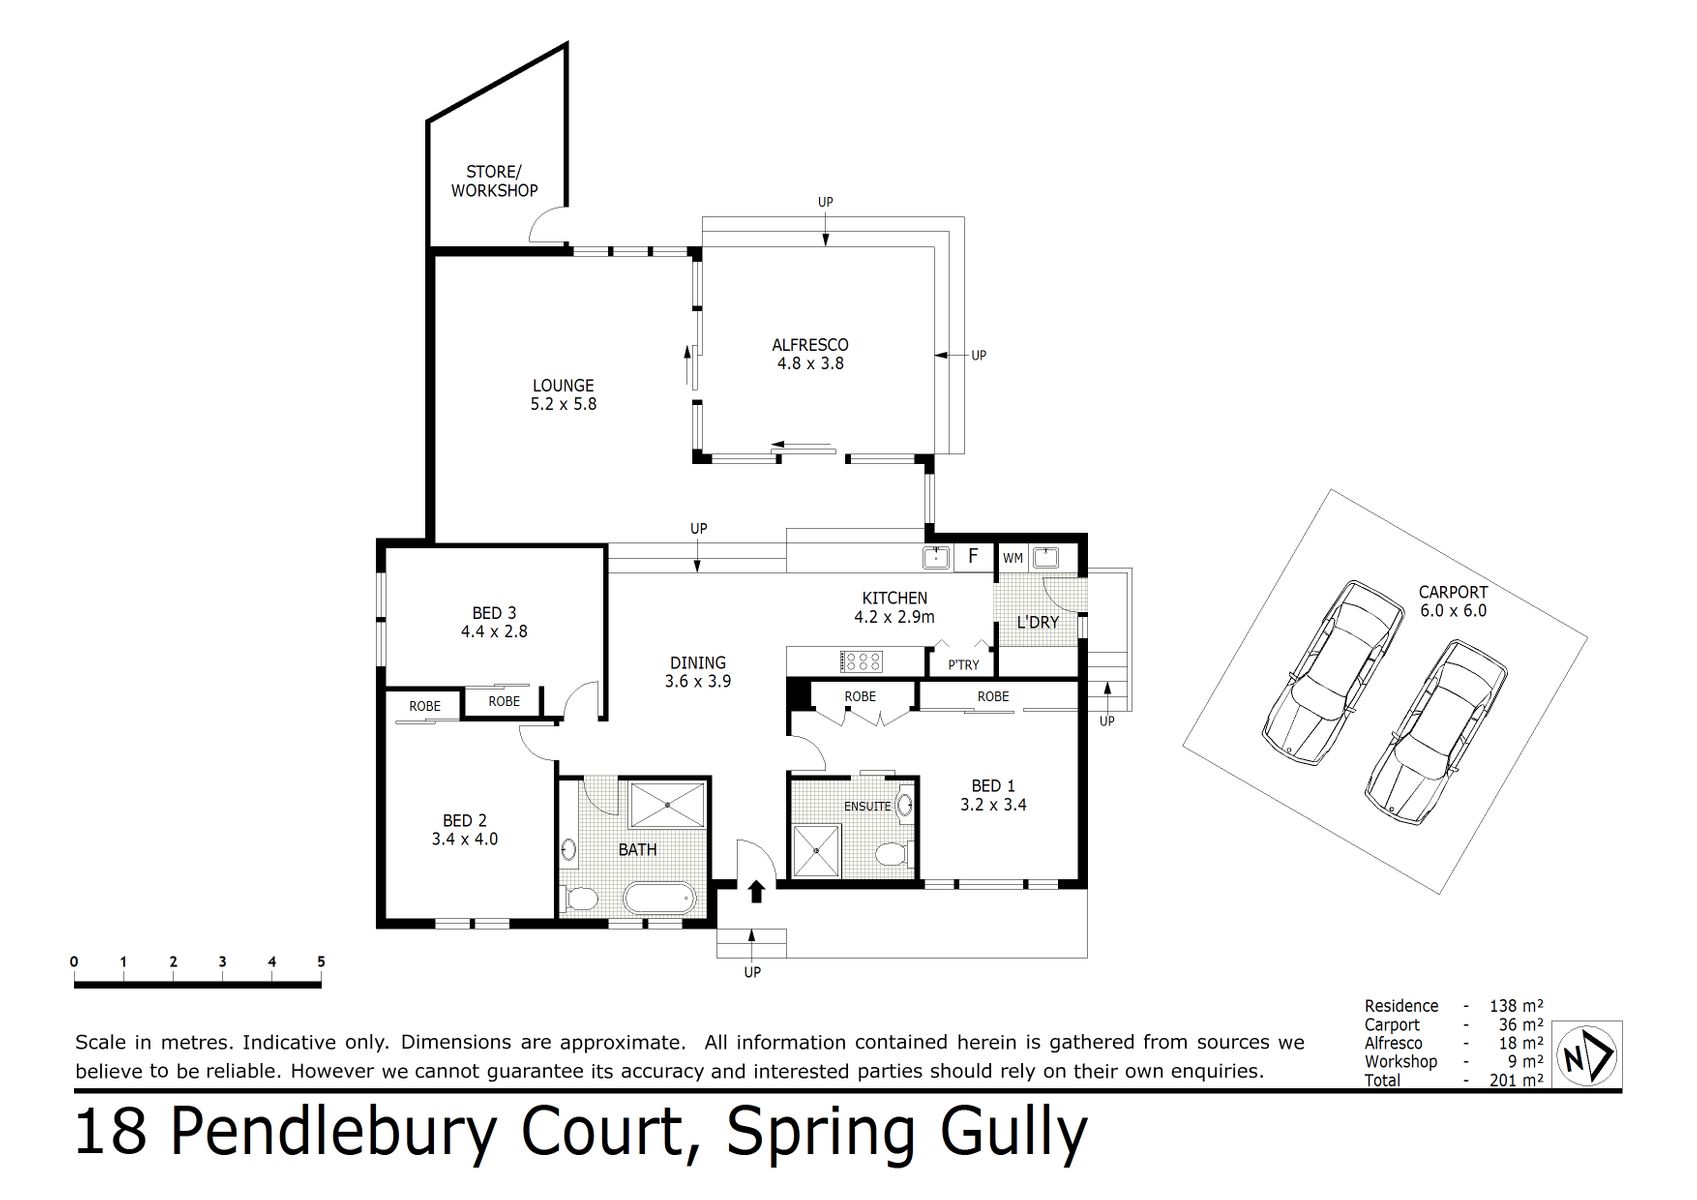 18 Pendlebury Court Spring Gully (21 SEP 2020) 138sqm